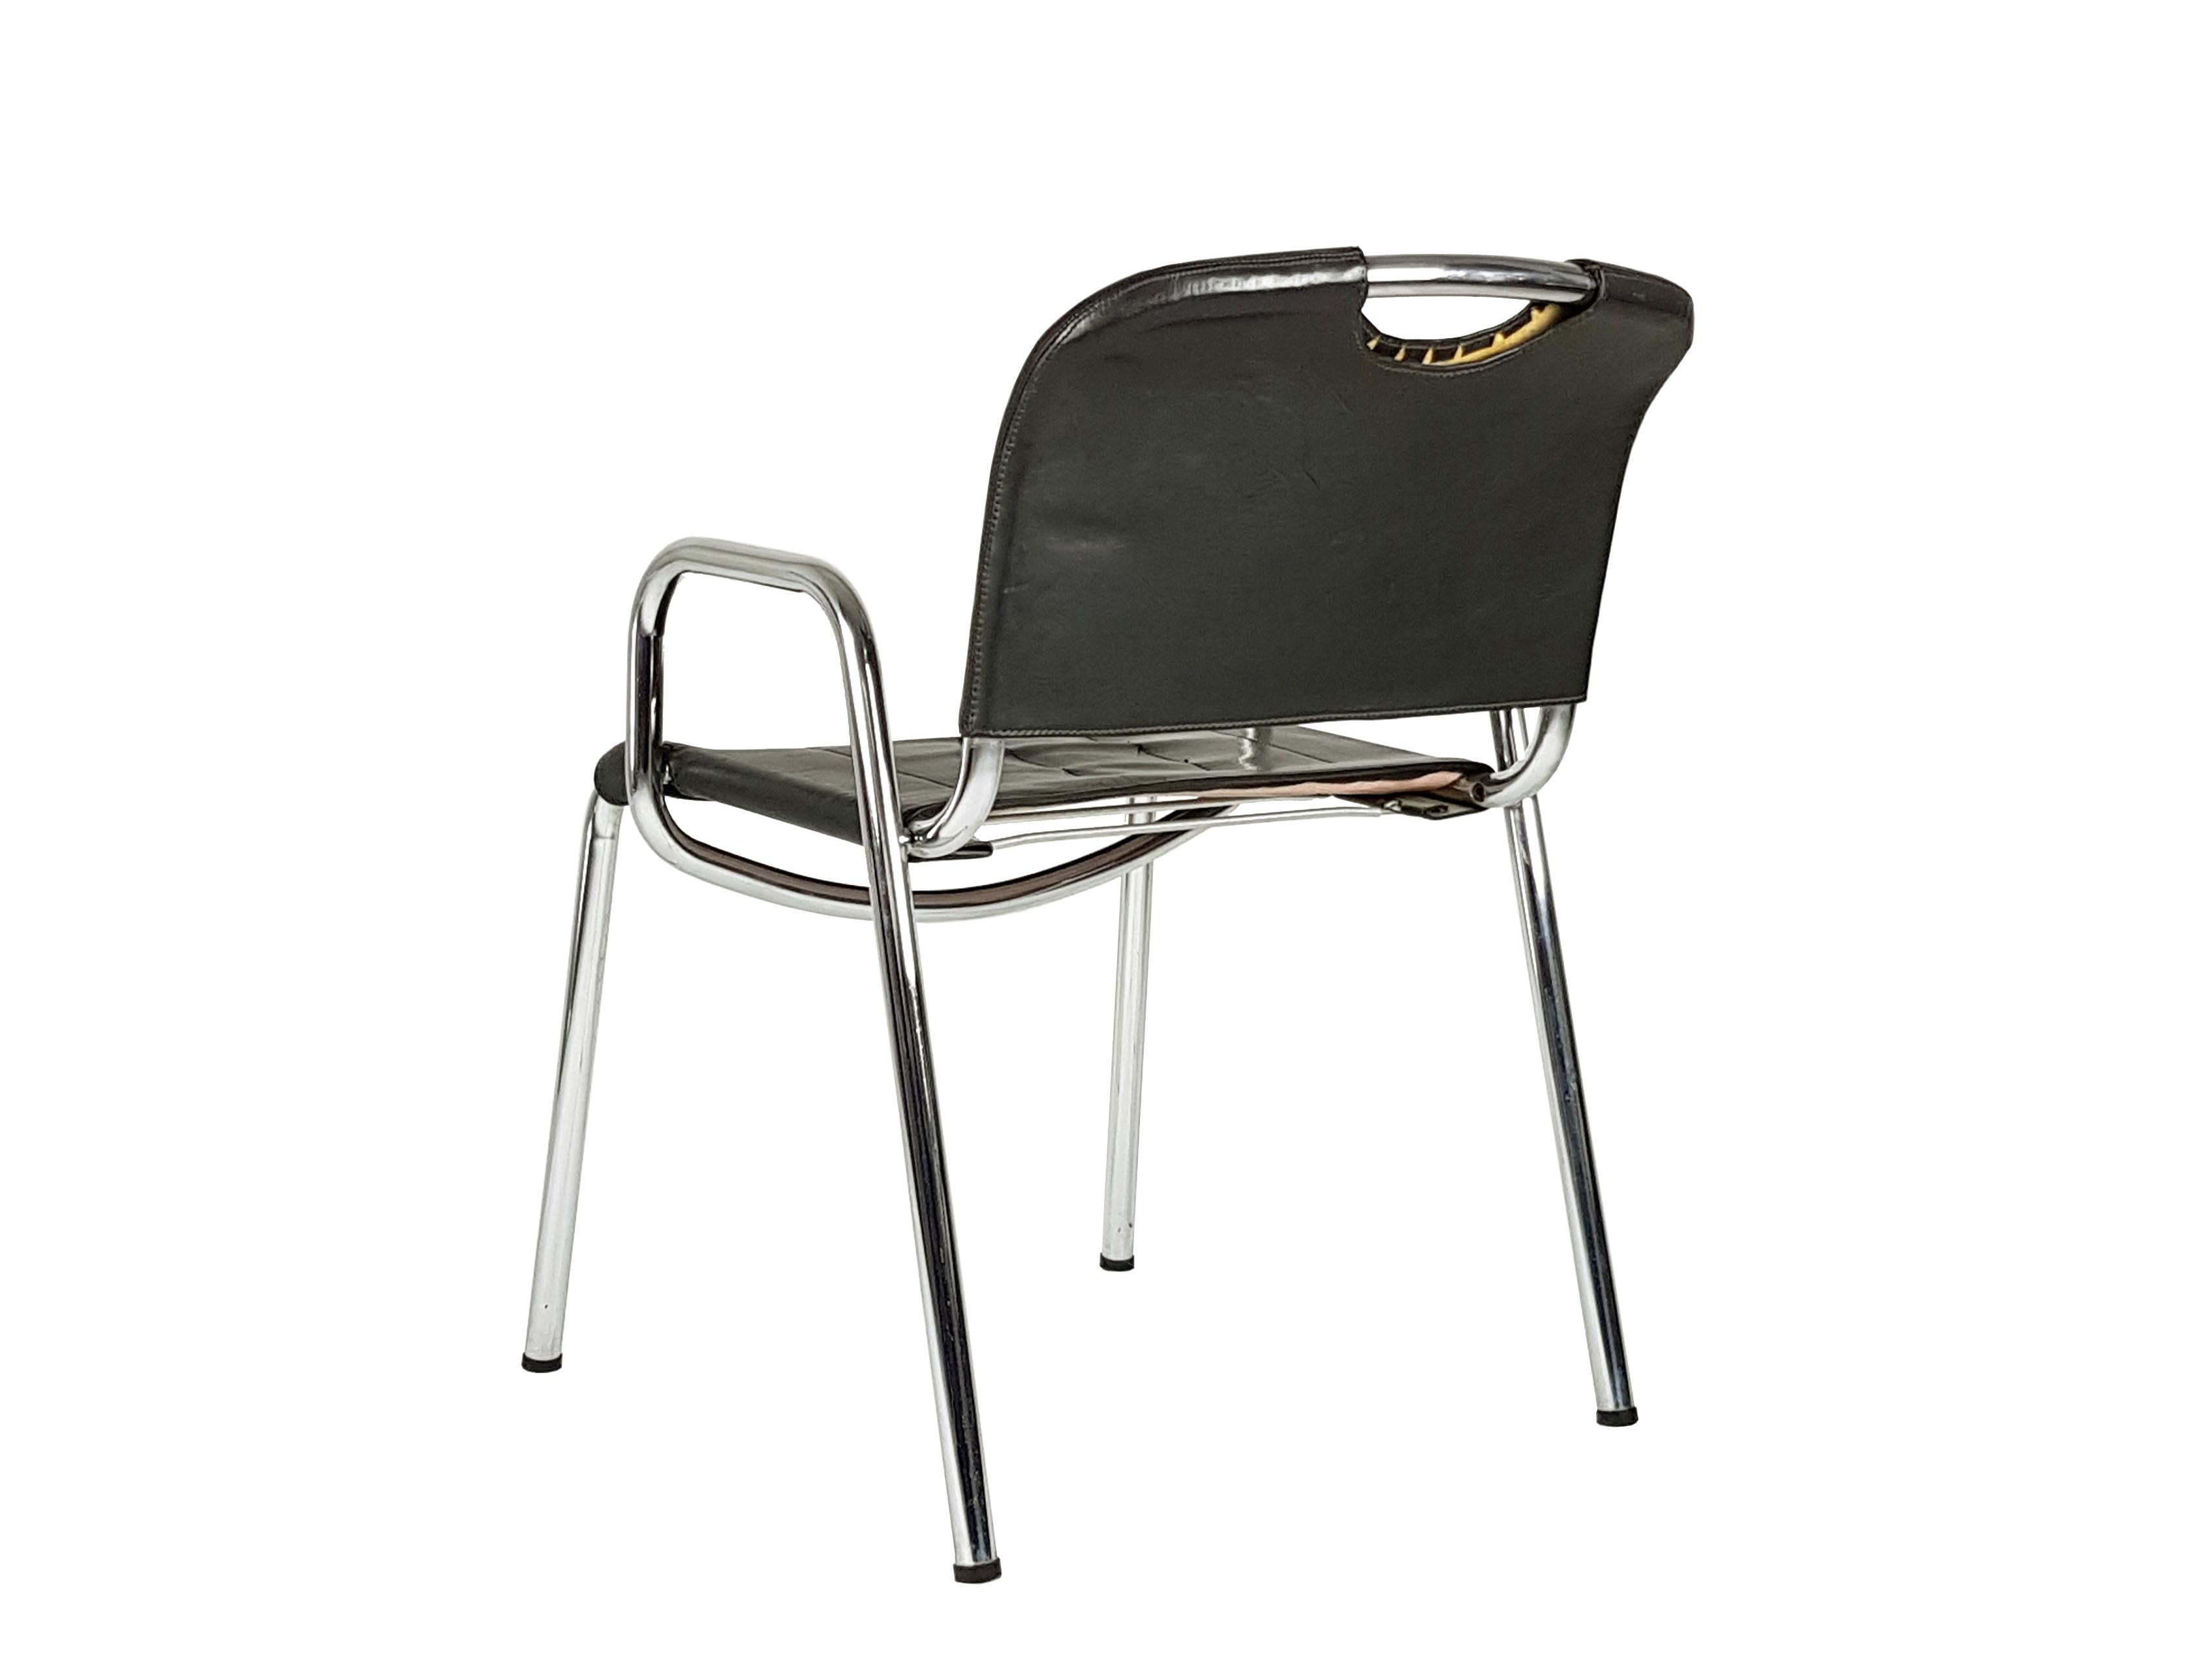 Plated Metal, Brown Leather Castiglietta Chairs by A. Castiglioni for Zanotta, Set of 4 For Sale